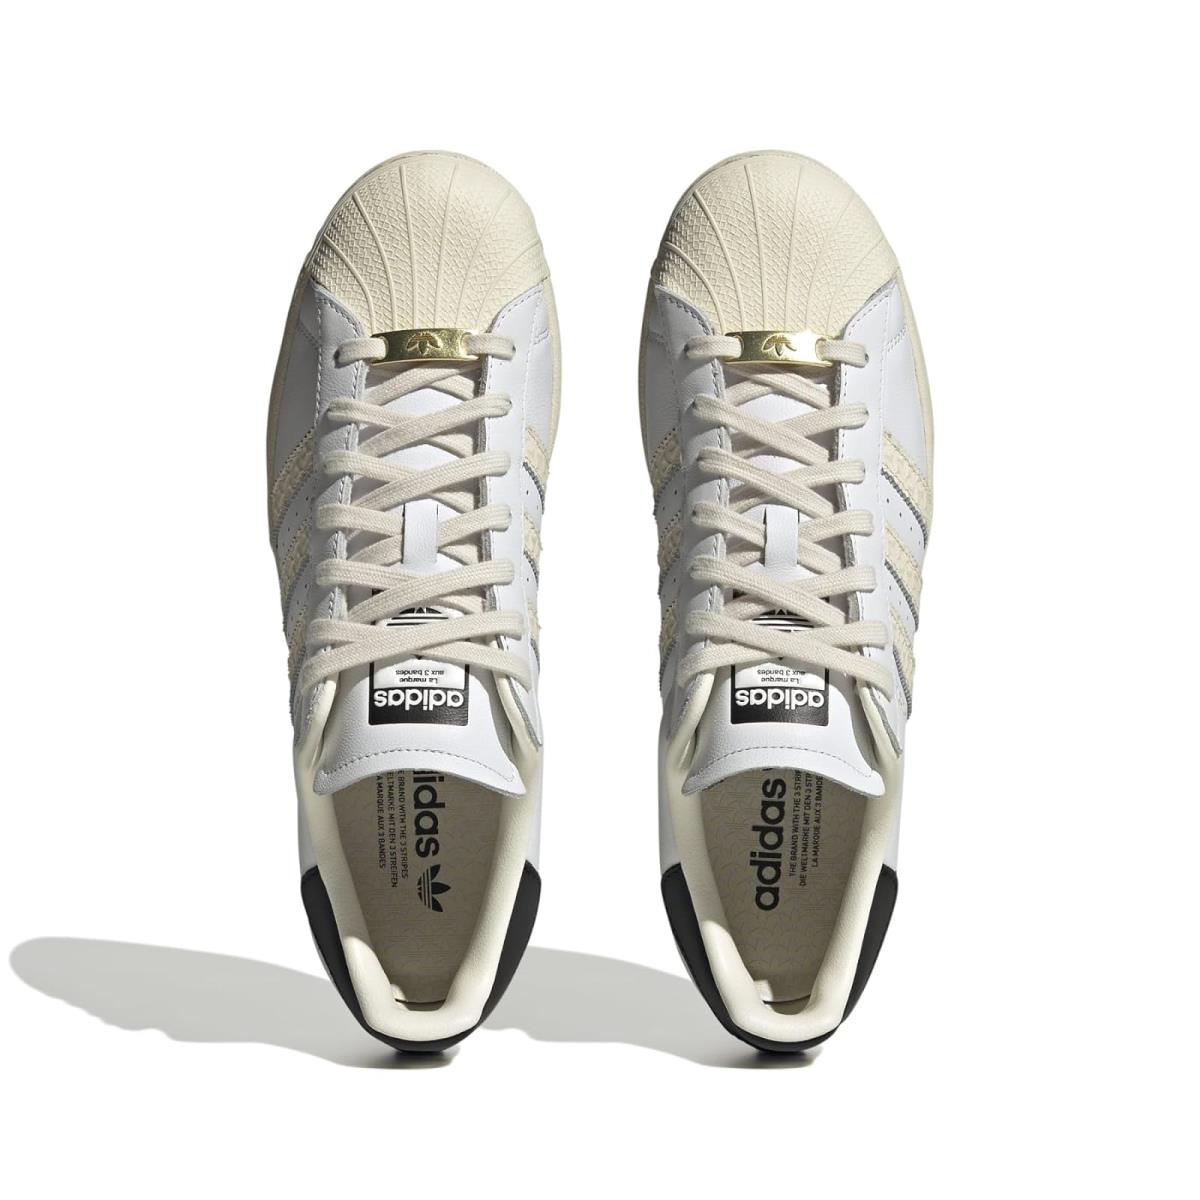 Man`s Sneakers Athletic Shoes Adidas Originals Superstar - White/Wonder White/Core Black